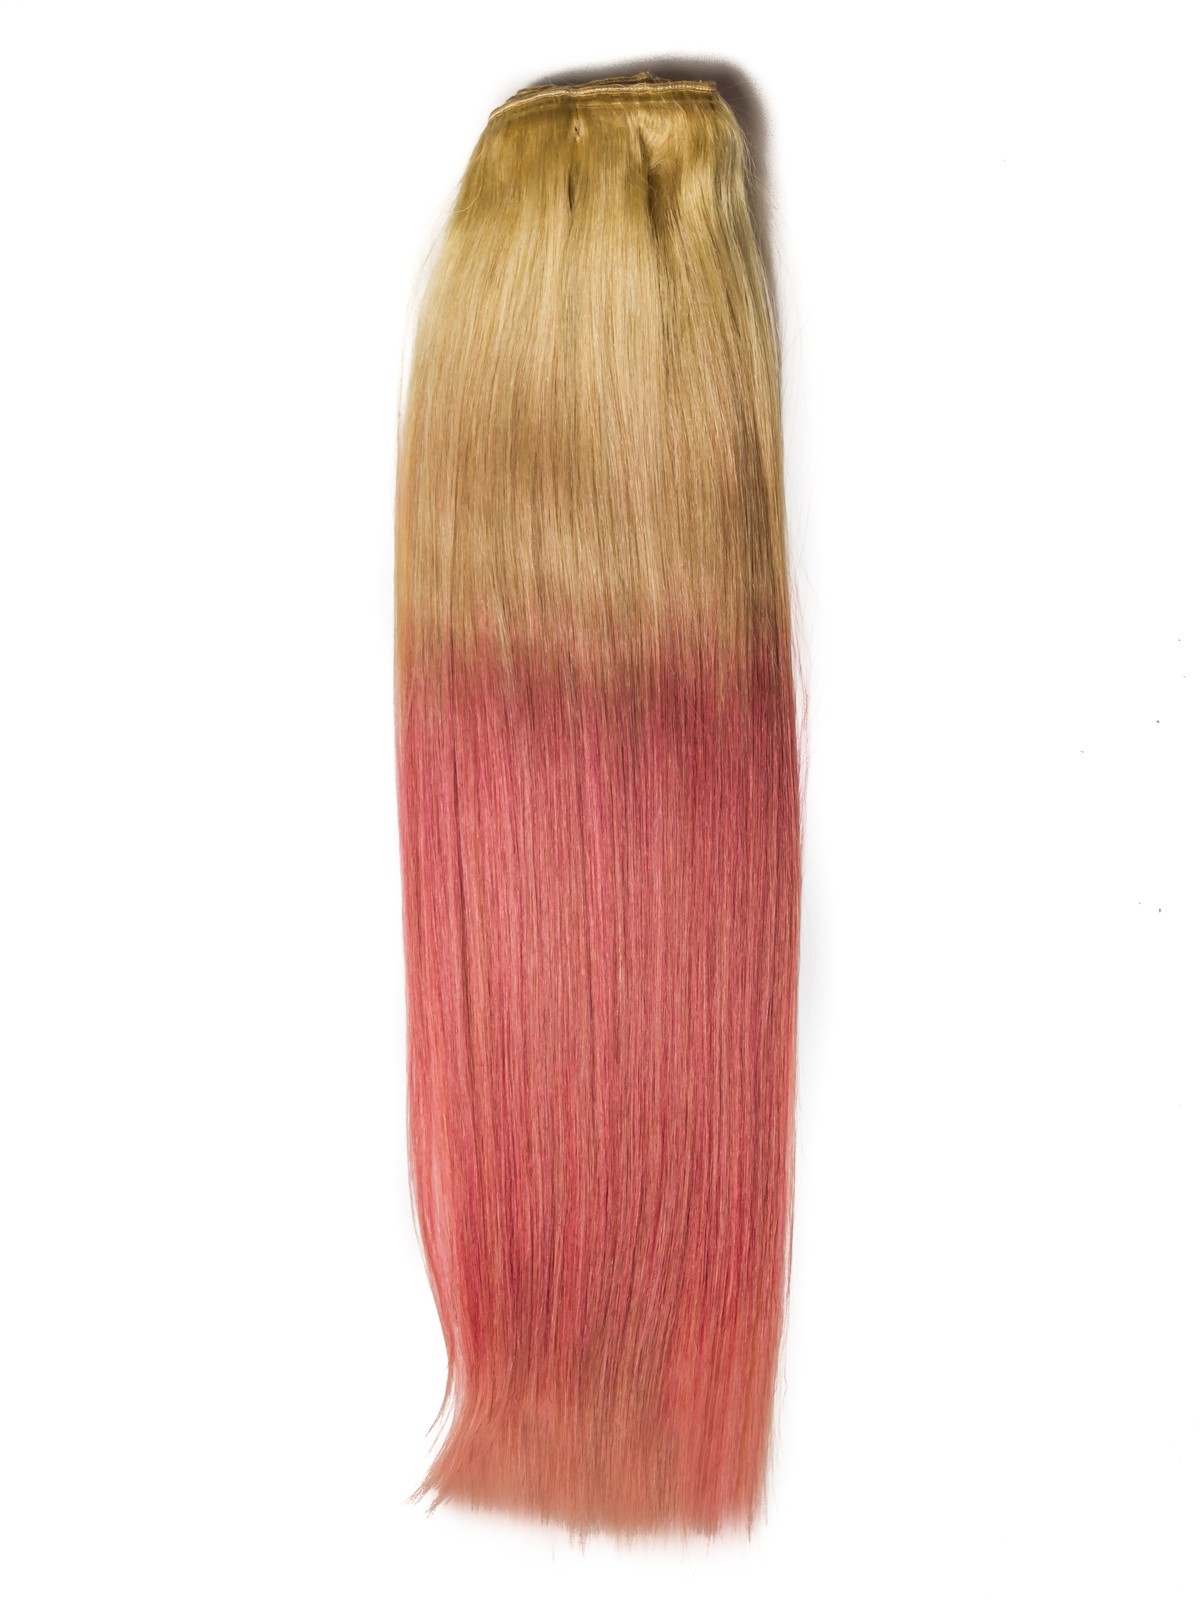 Extensii Clip-On PREMIUM Ombre Blond/Roz Pastel